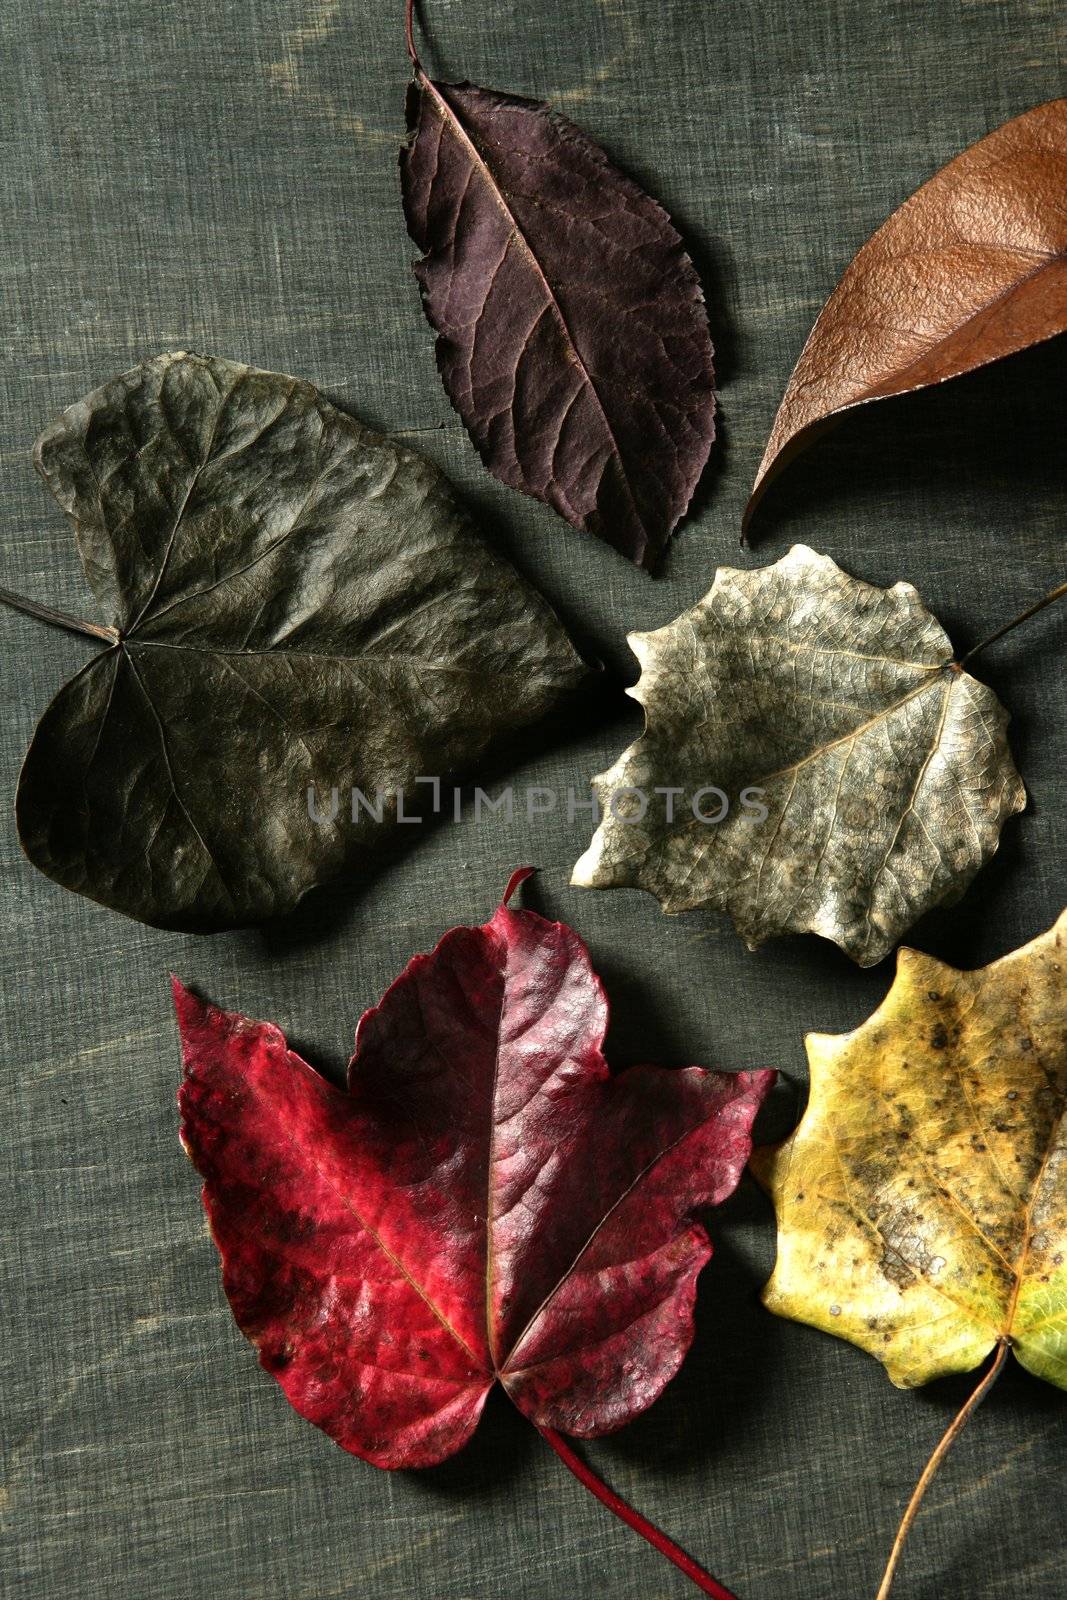 Still of autumn leaves, dark wood background, fall image by lunamarina